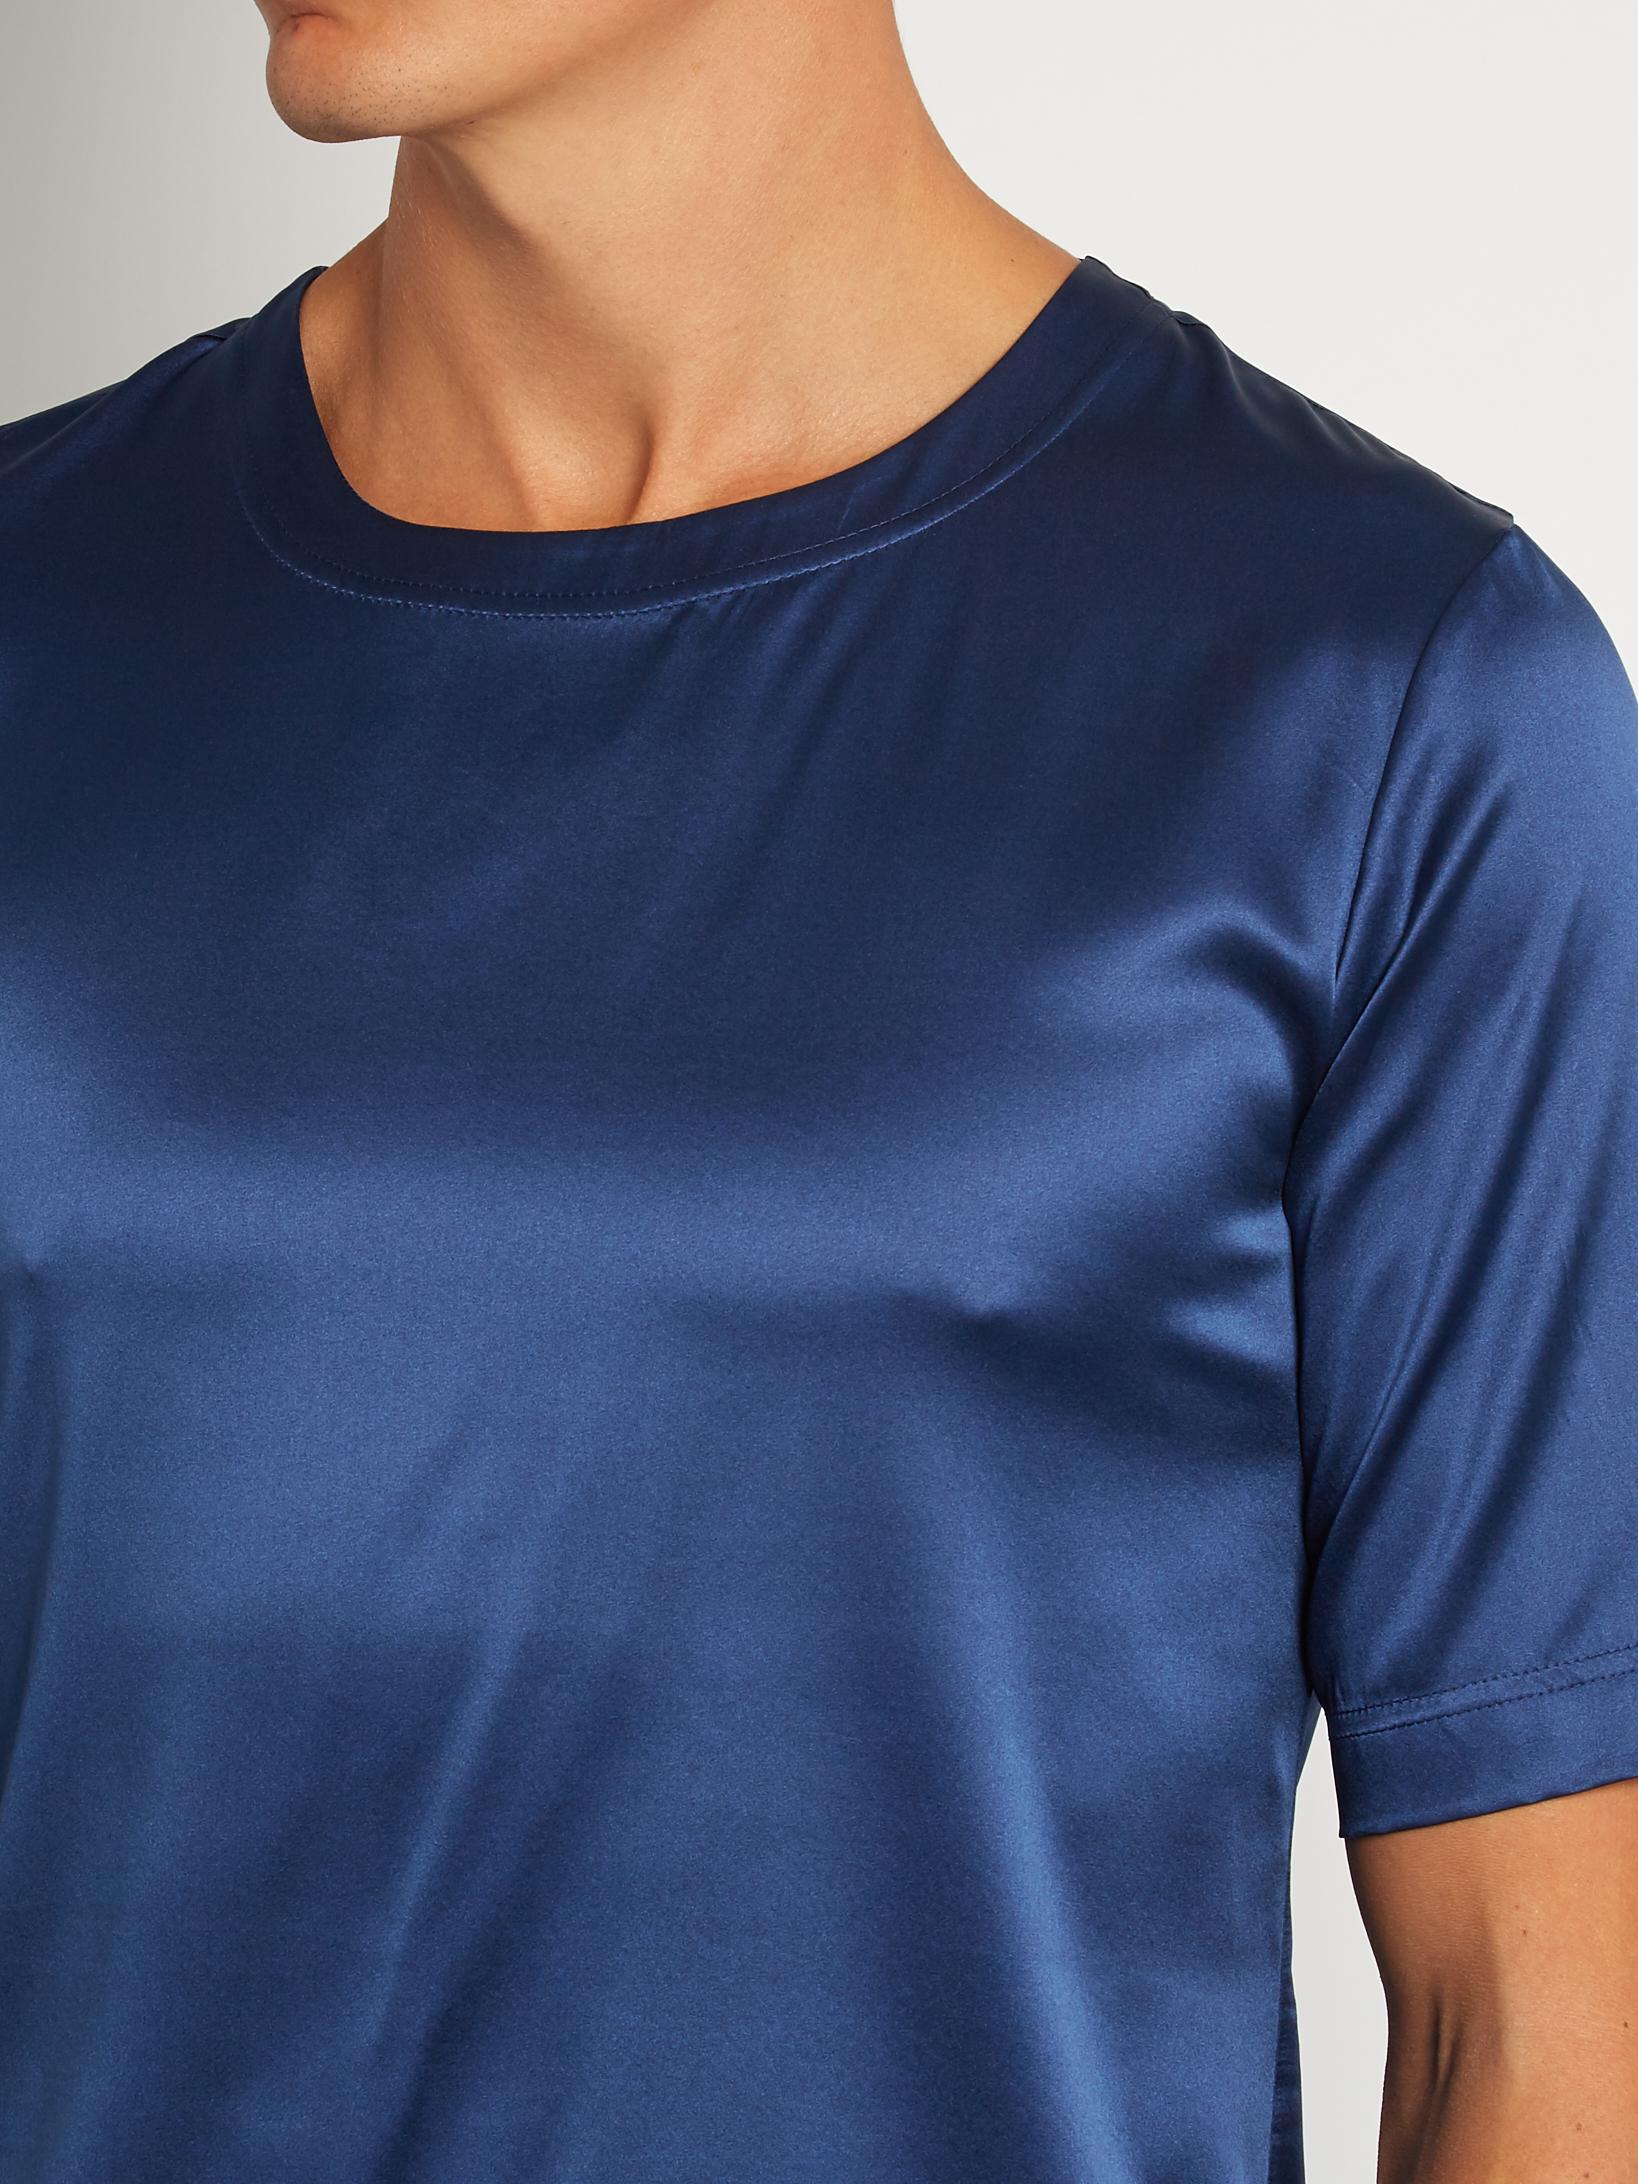 Meng Stretch Silk-satin T-shirt in Blue for Men - Lyst